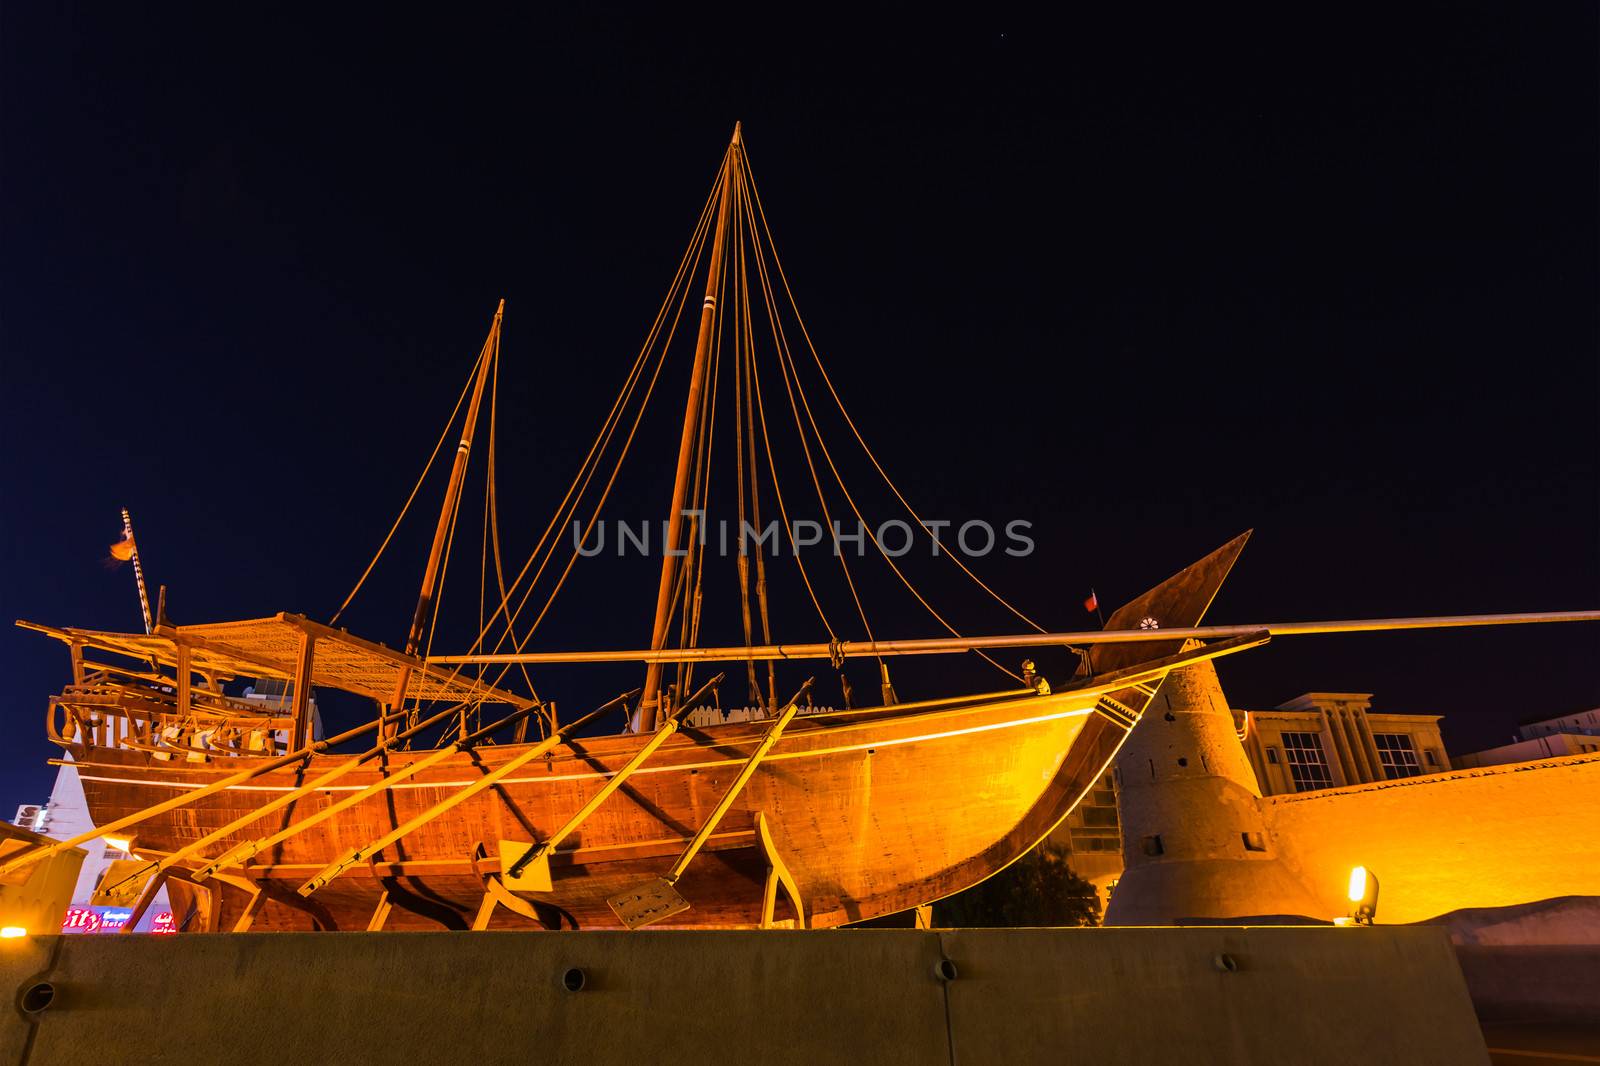 old boat on display near fahidi fort at Dubai Museum by oleg_zhukov